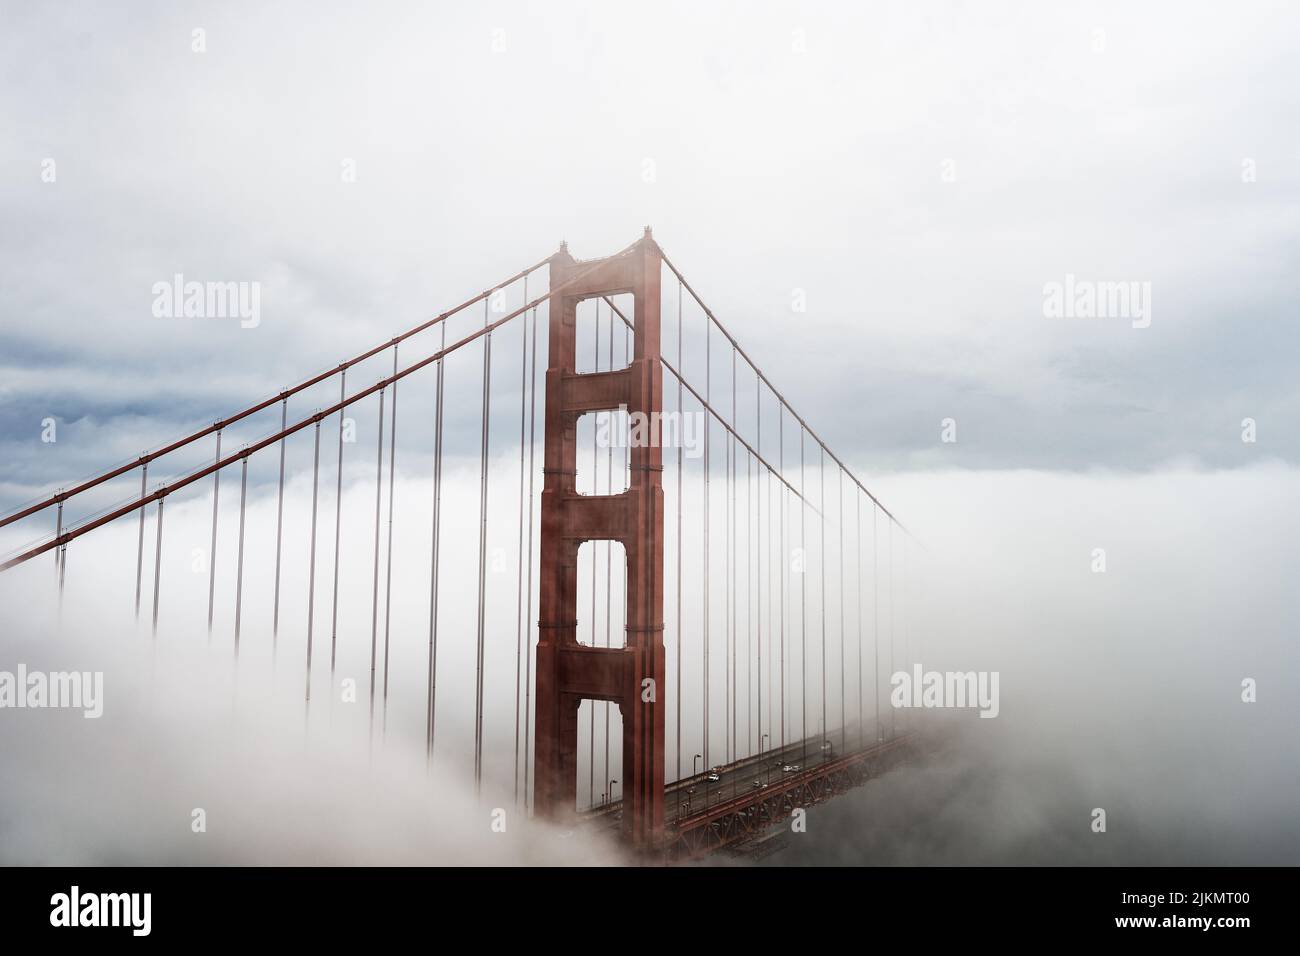 Detalle arquitectónico del puente Golden Gate, San Francisco, California Foto de stock